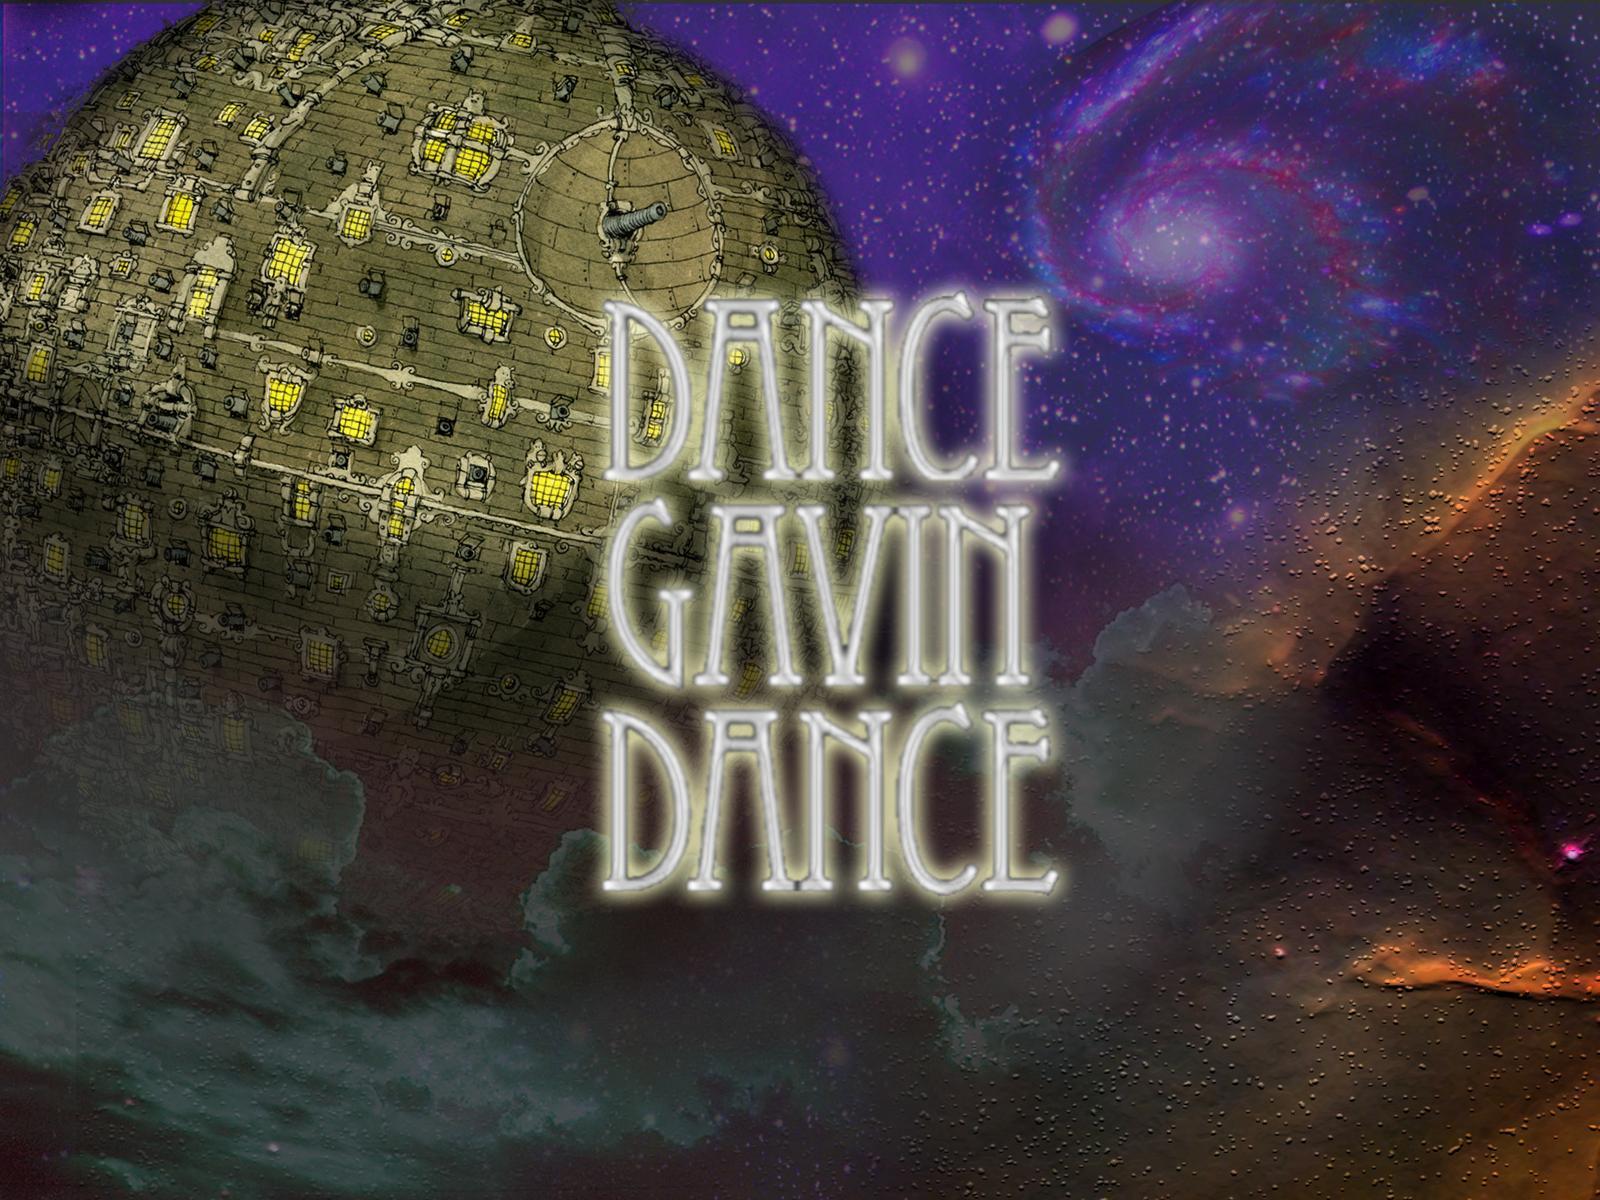 I made a wallpaper for Dance Gavin Dance. 1600x1200